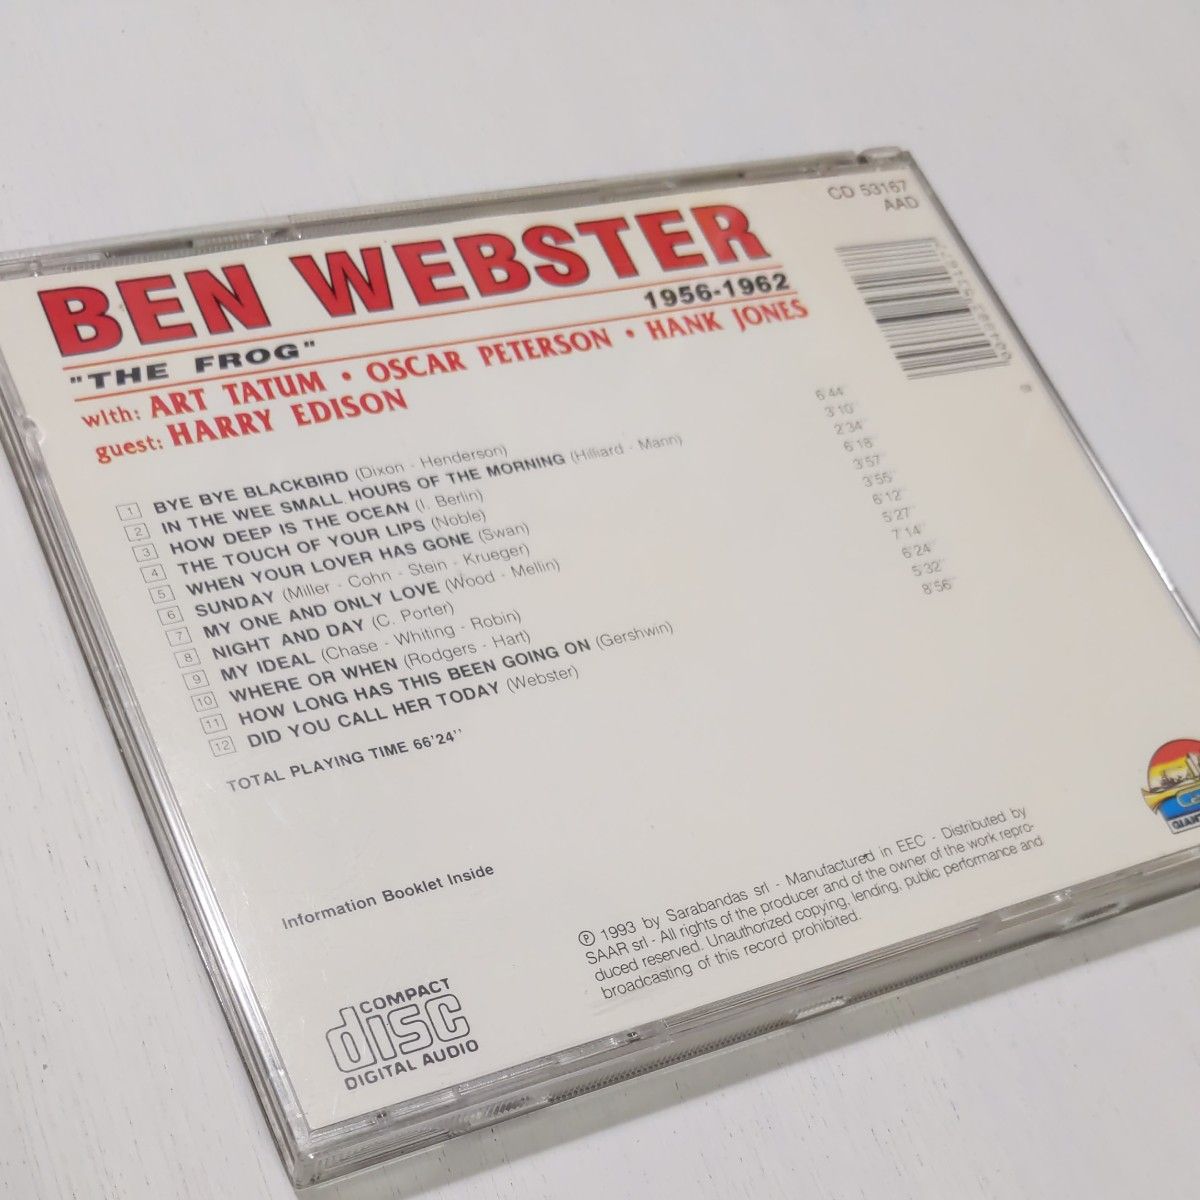 BEN WEBSTER ベン・ウェブスター "THE FROG" 1956-1962 GIANTS OF JAZZ 輸入盤CD 